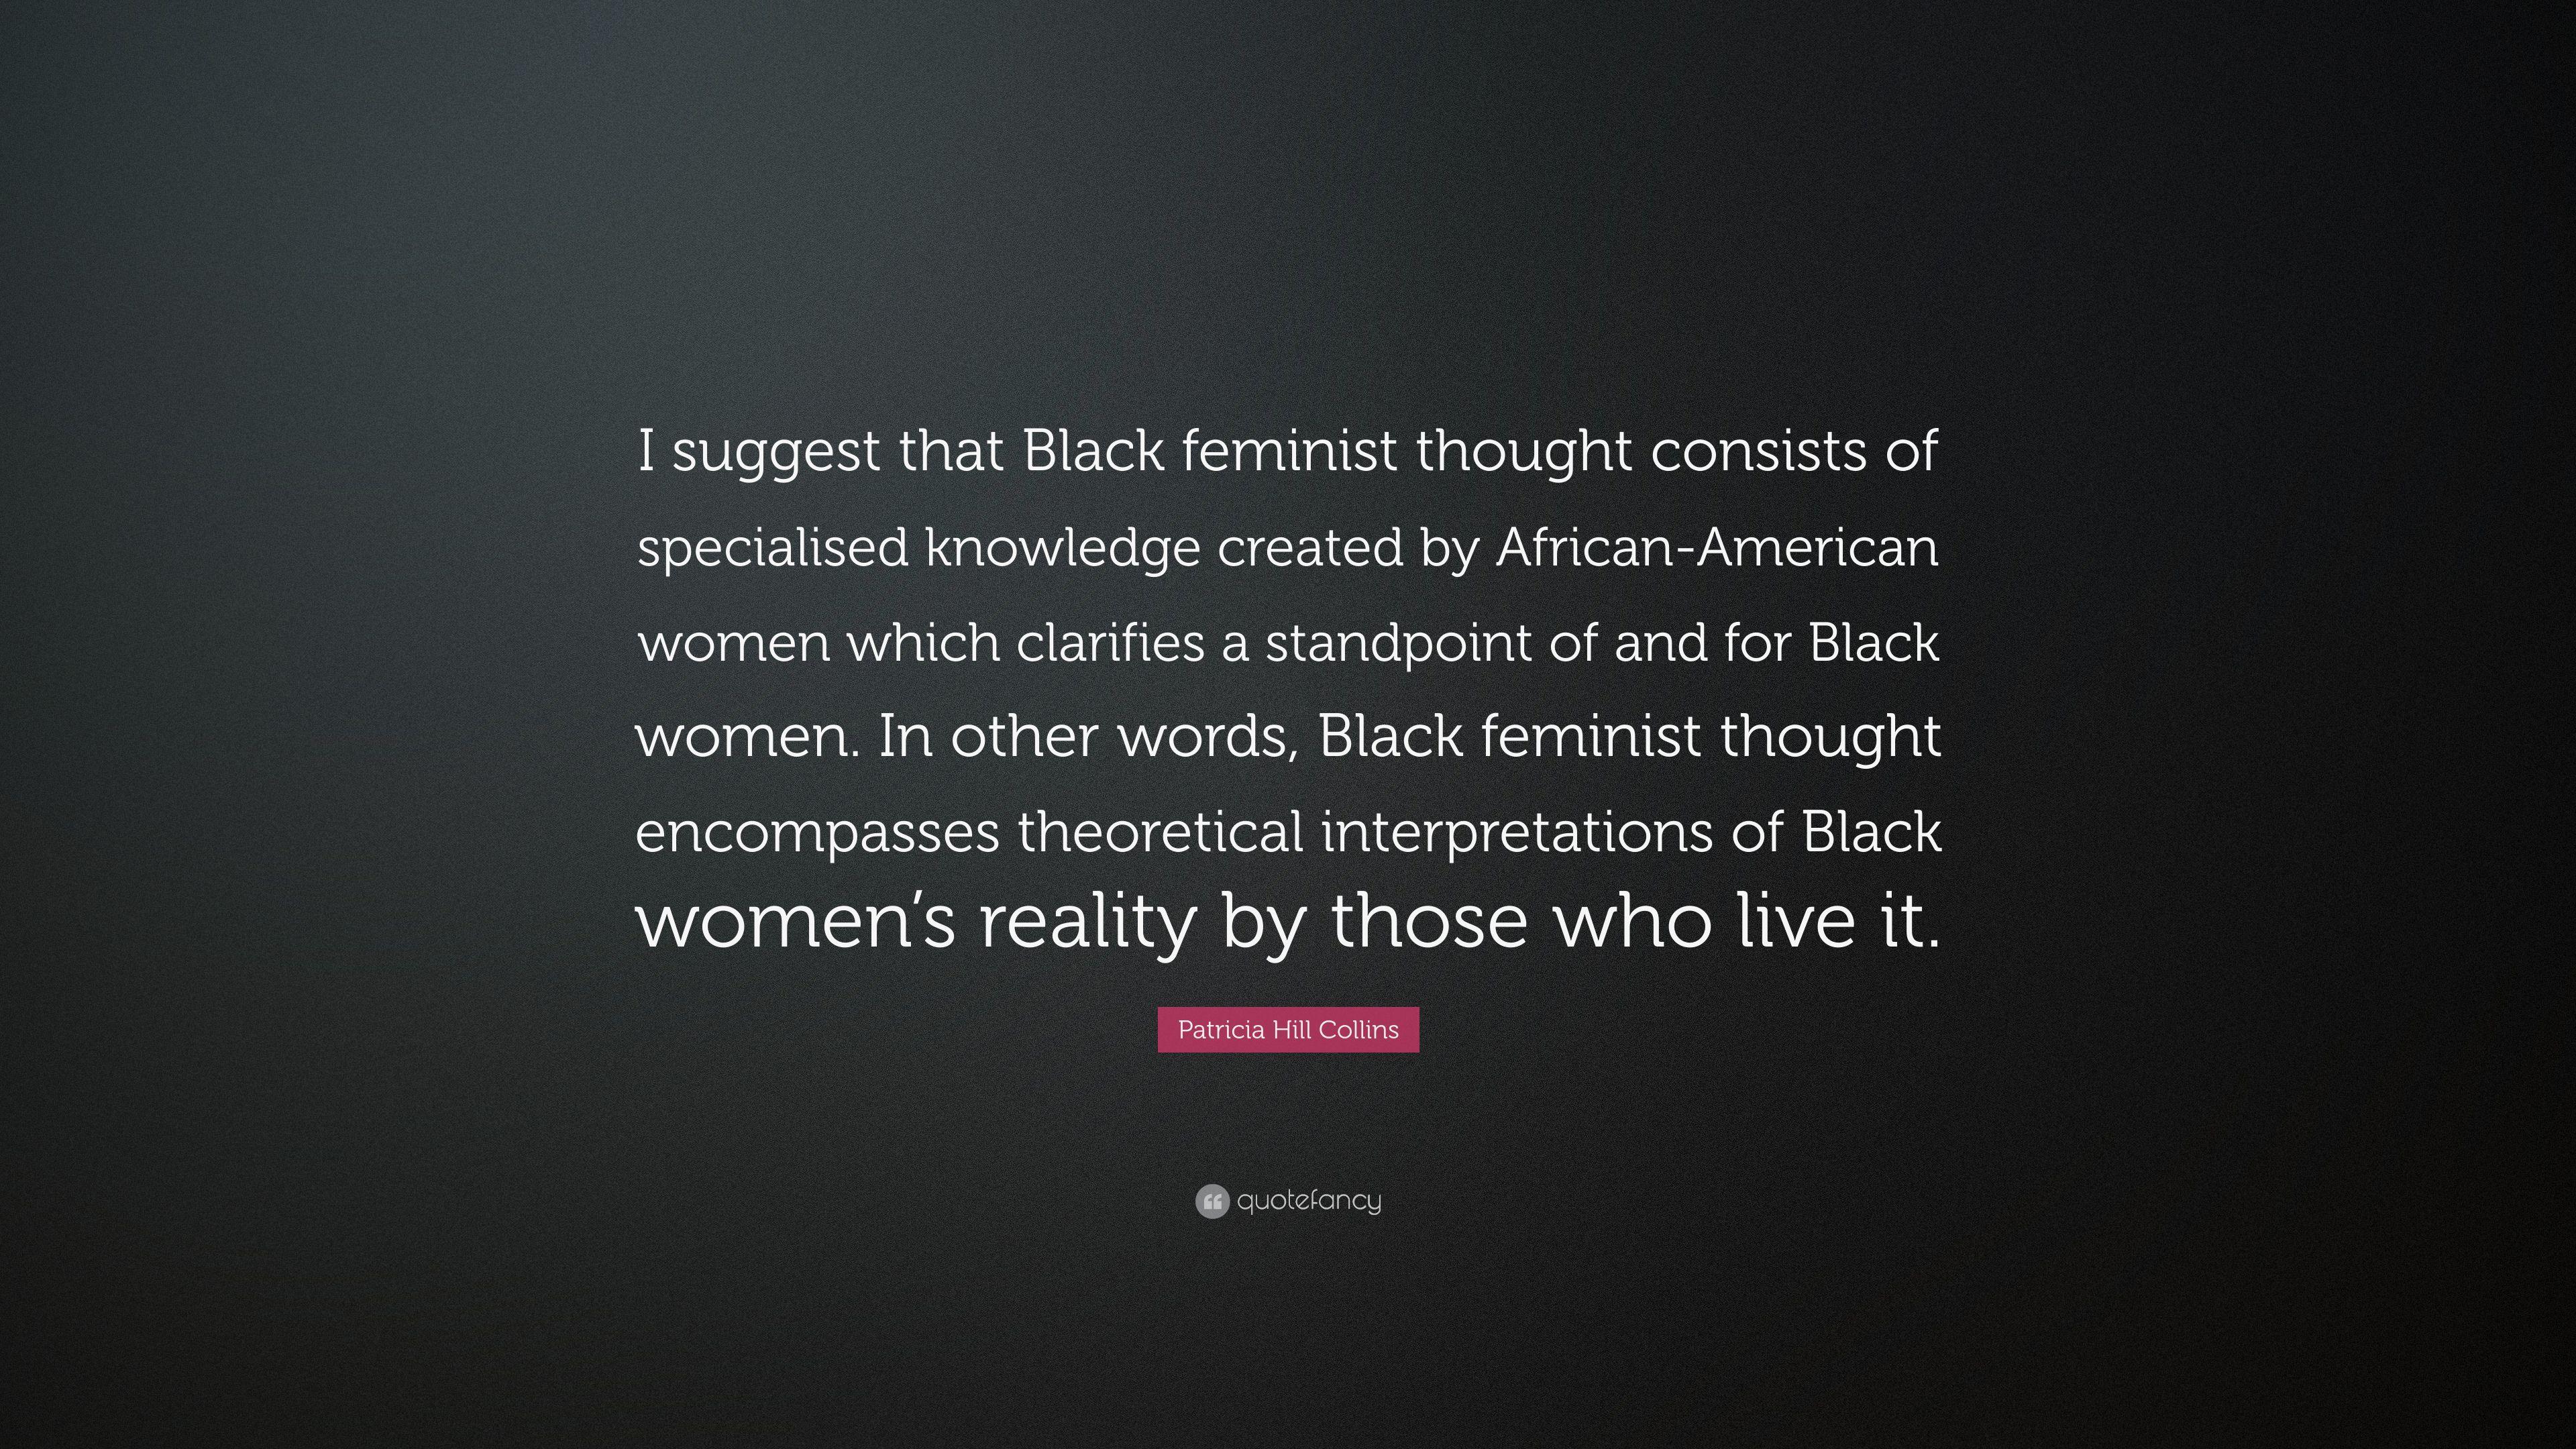 black feminist epistemology patricia hill collins